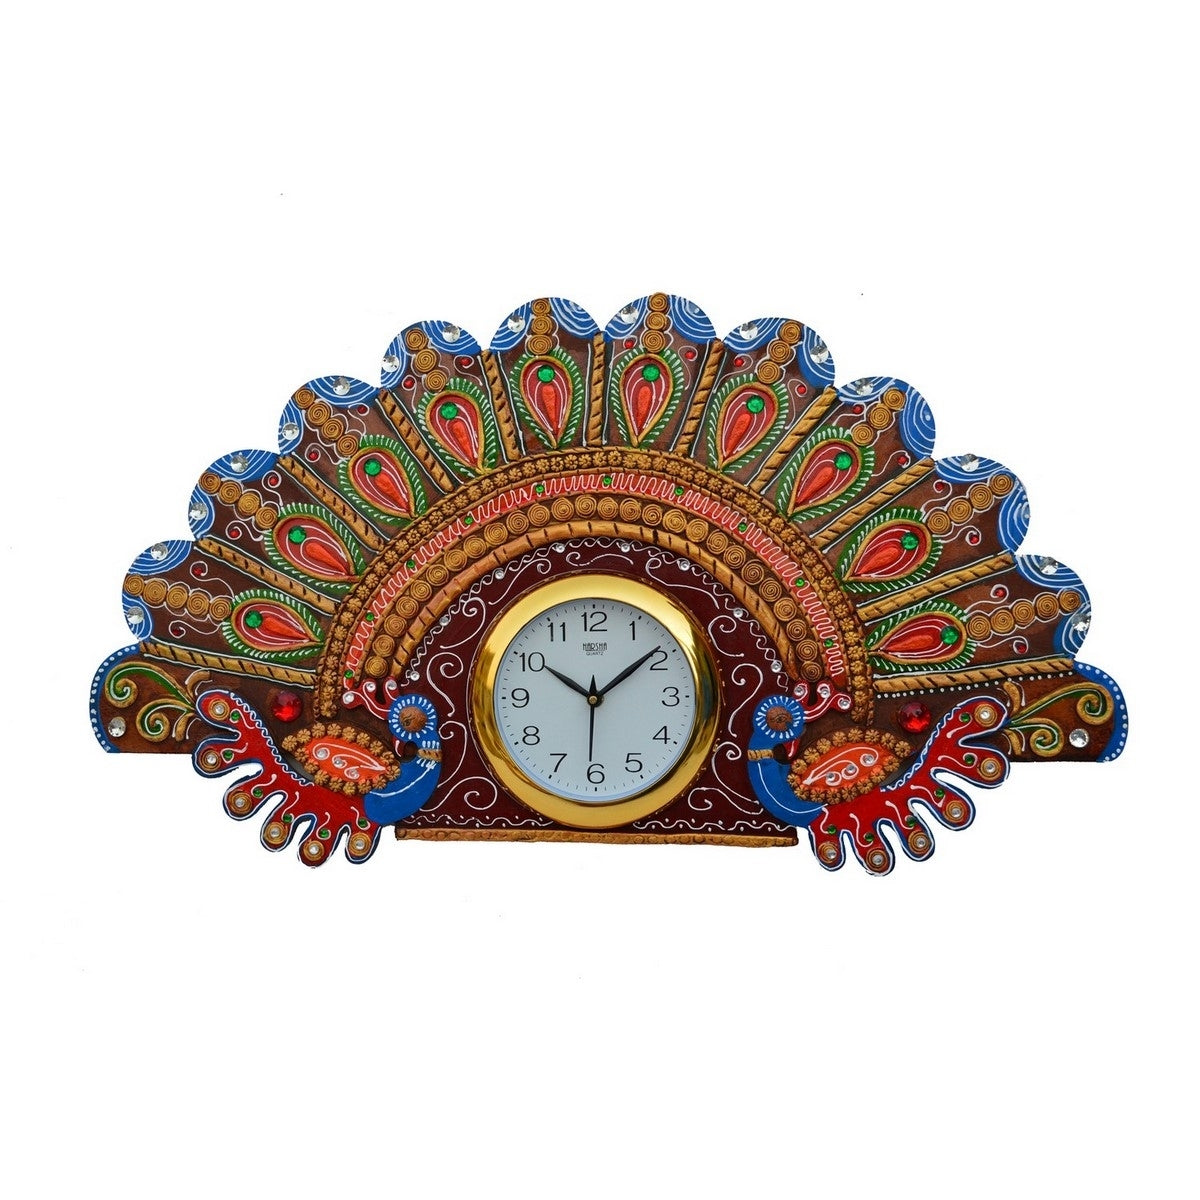 Papier-Mache Peacock Design Handcrafted Wall Clock